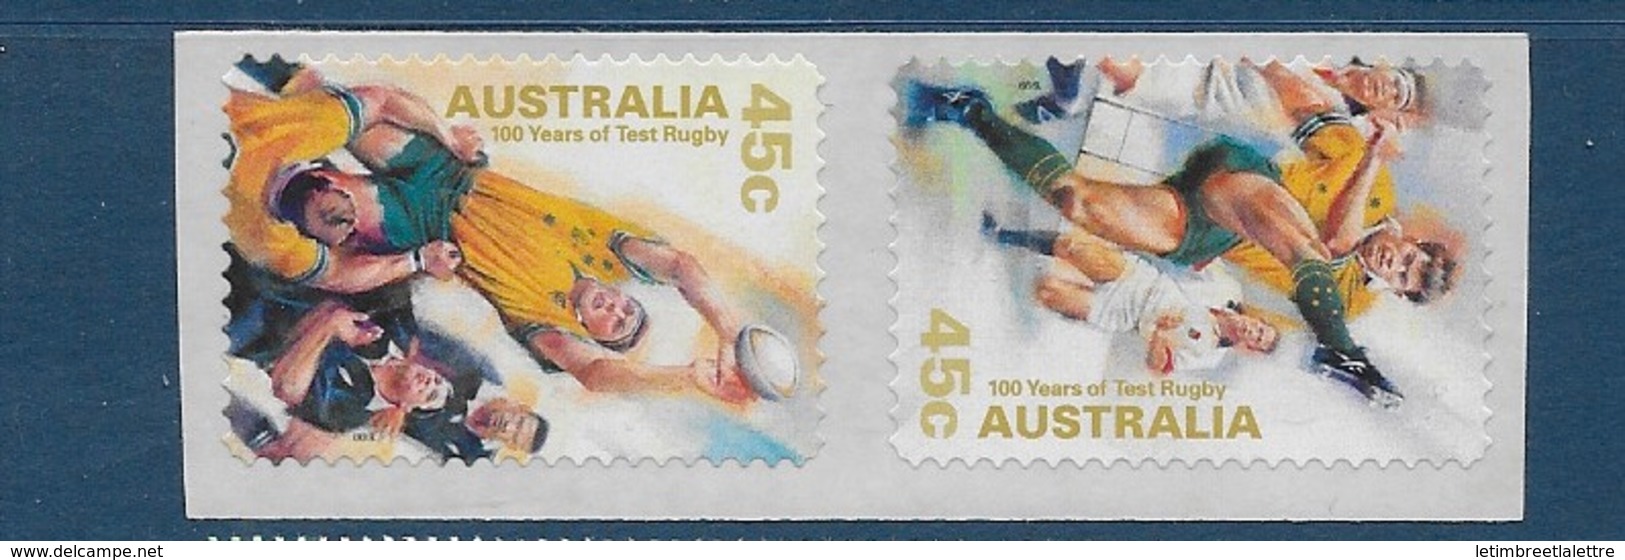 Australie N°1785-1786** - Mint Stamps